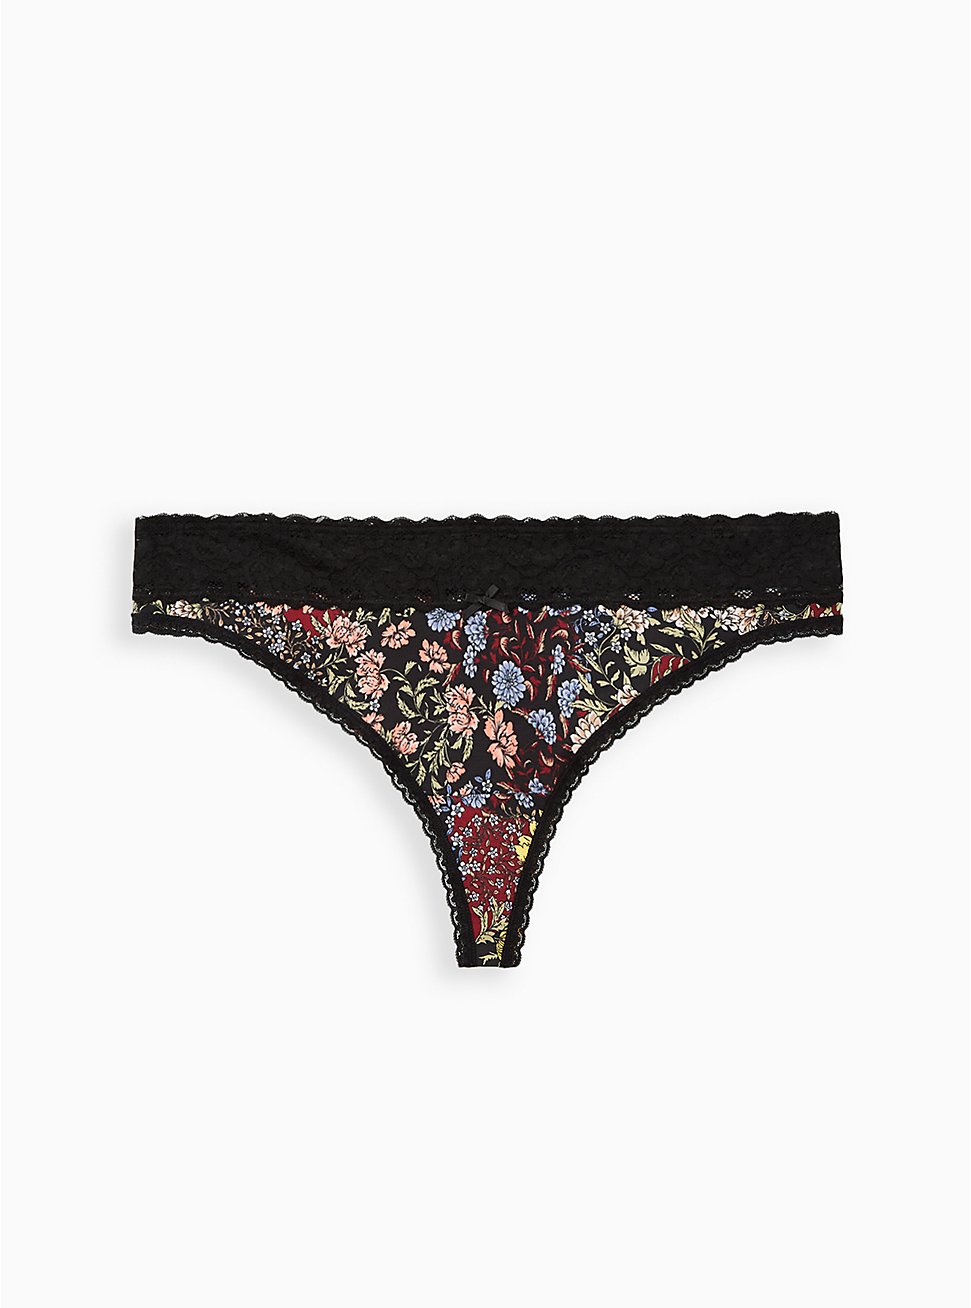 Plus Size - Navy Floral Wide Lace Cotton Thong Panty - Torrid